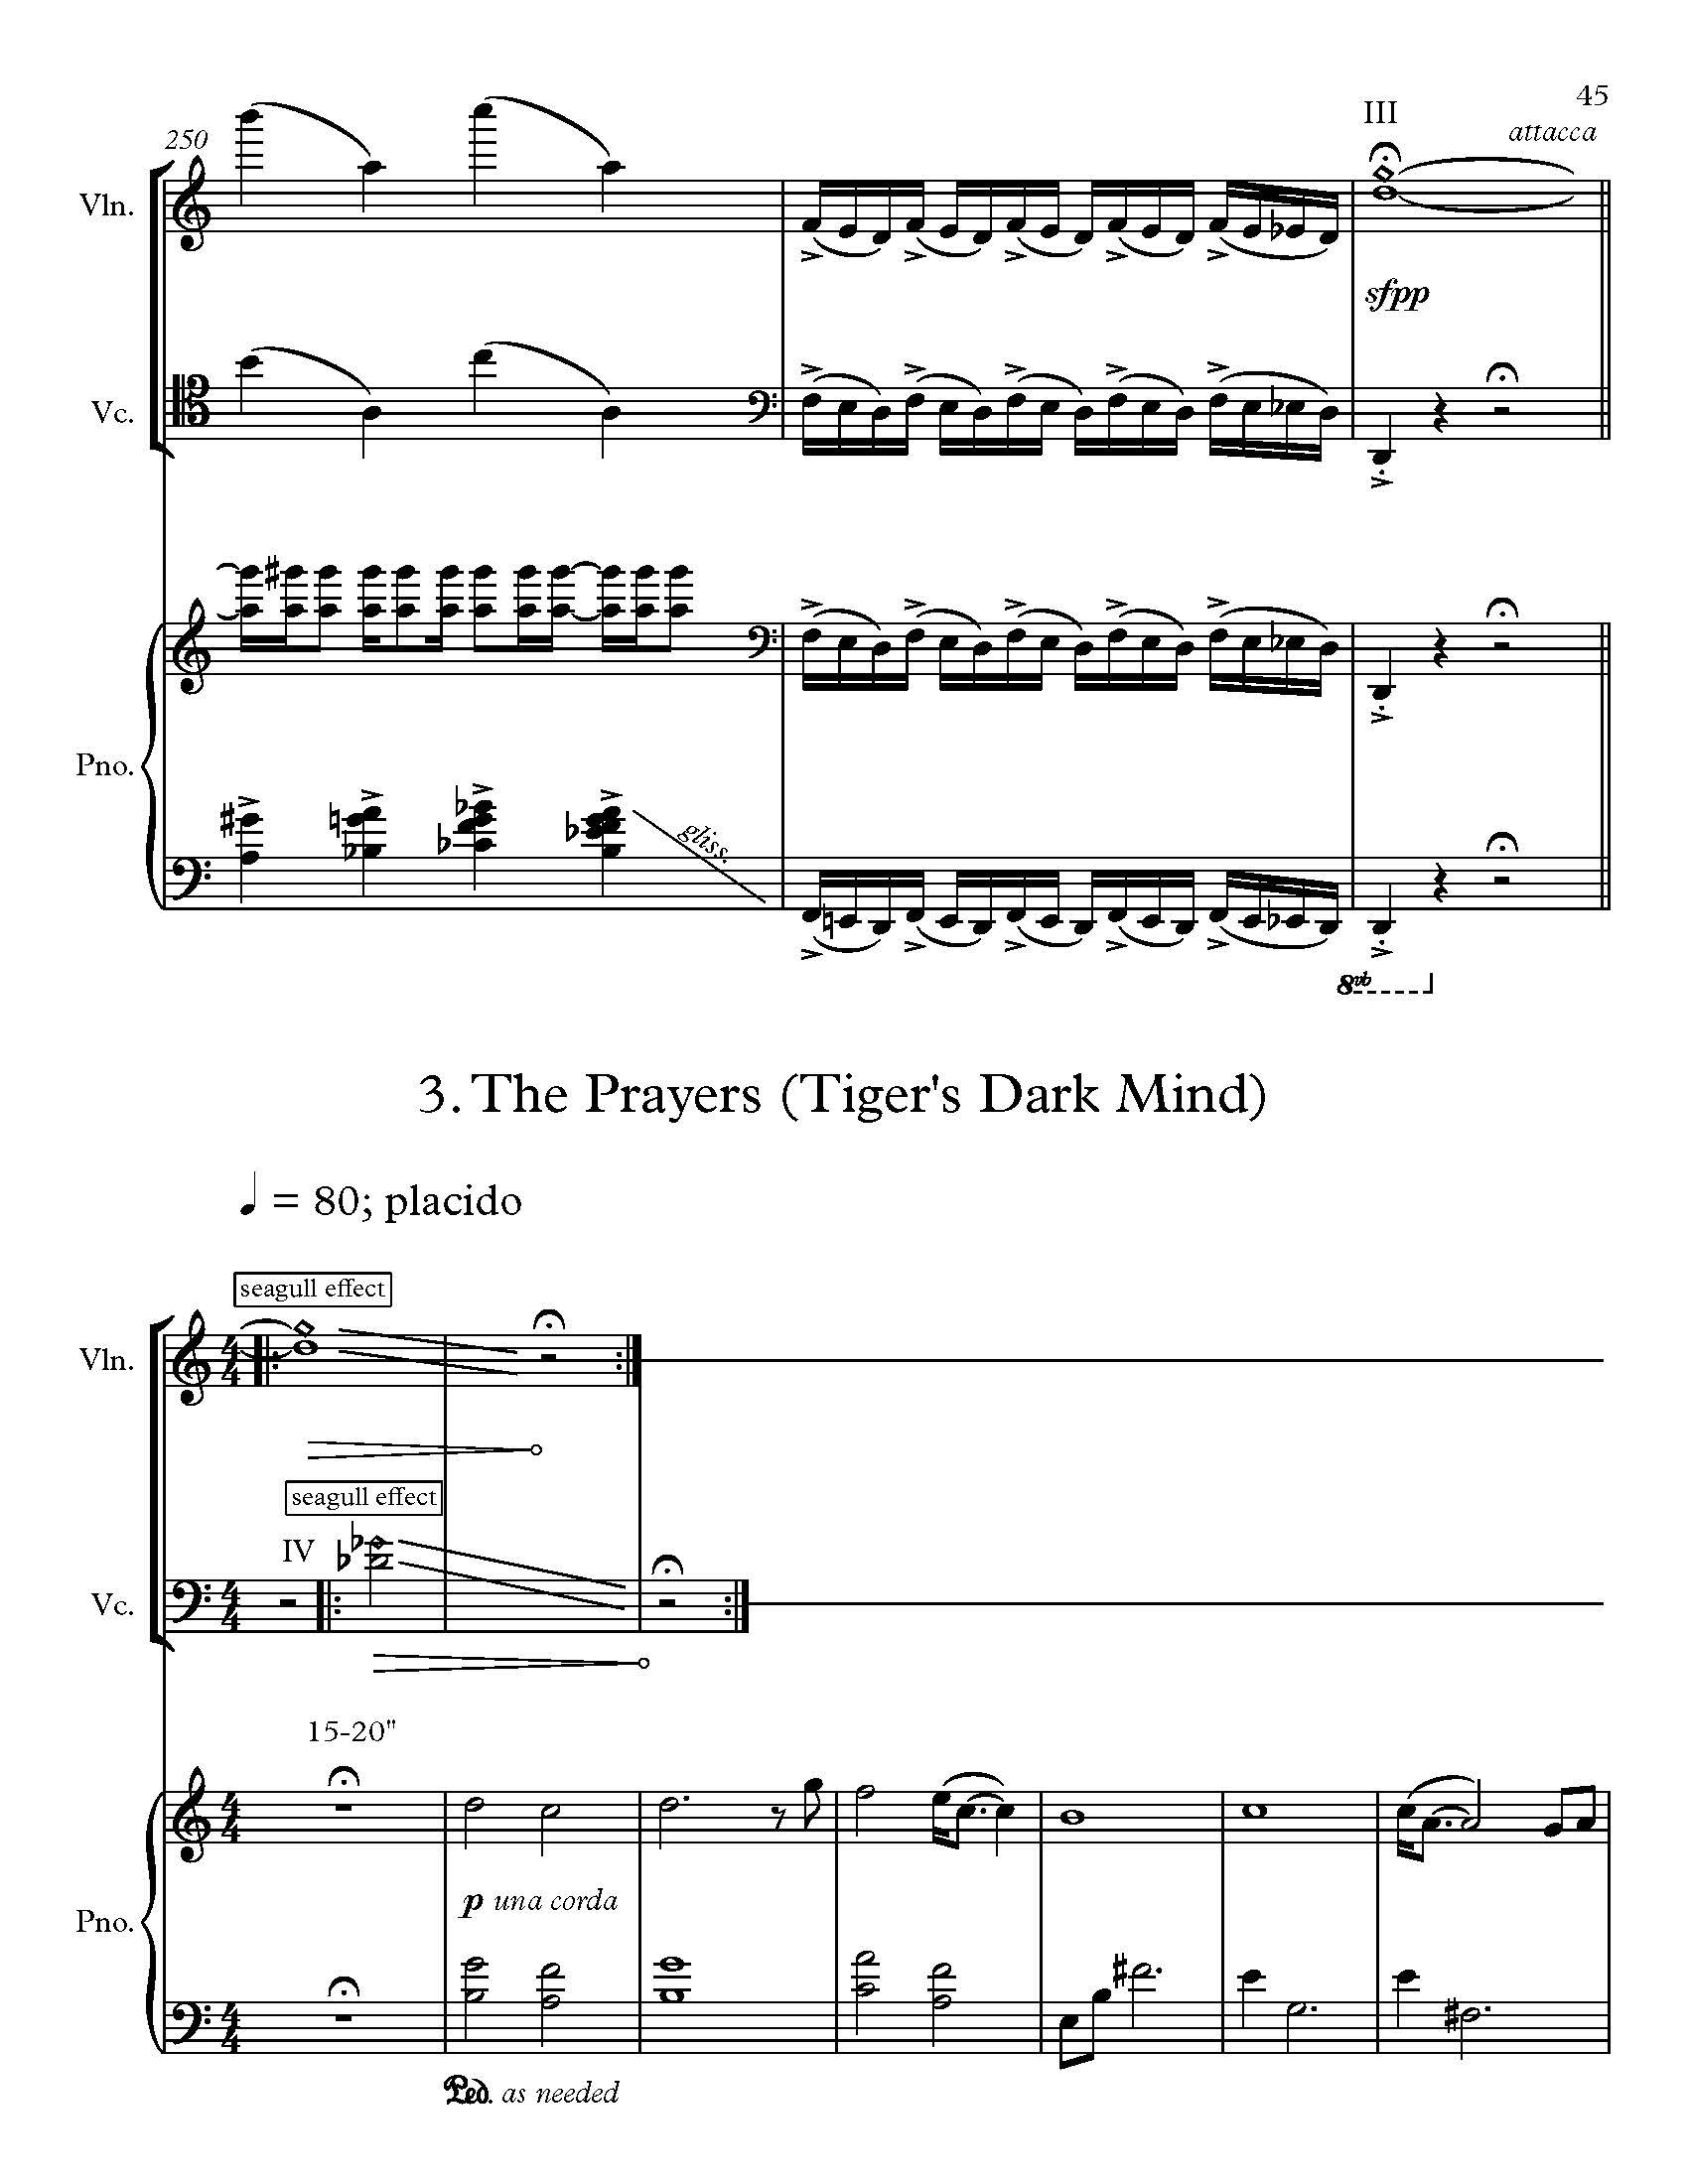 The Birth of Dangun - Complete Score_Page_051.jpg